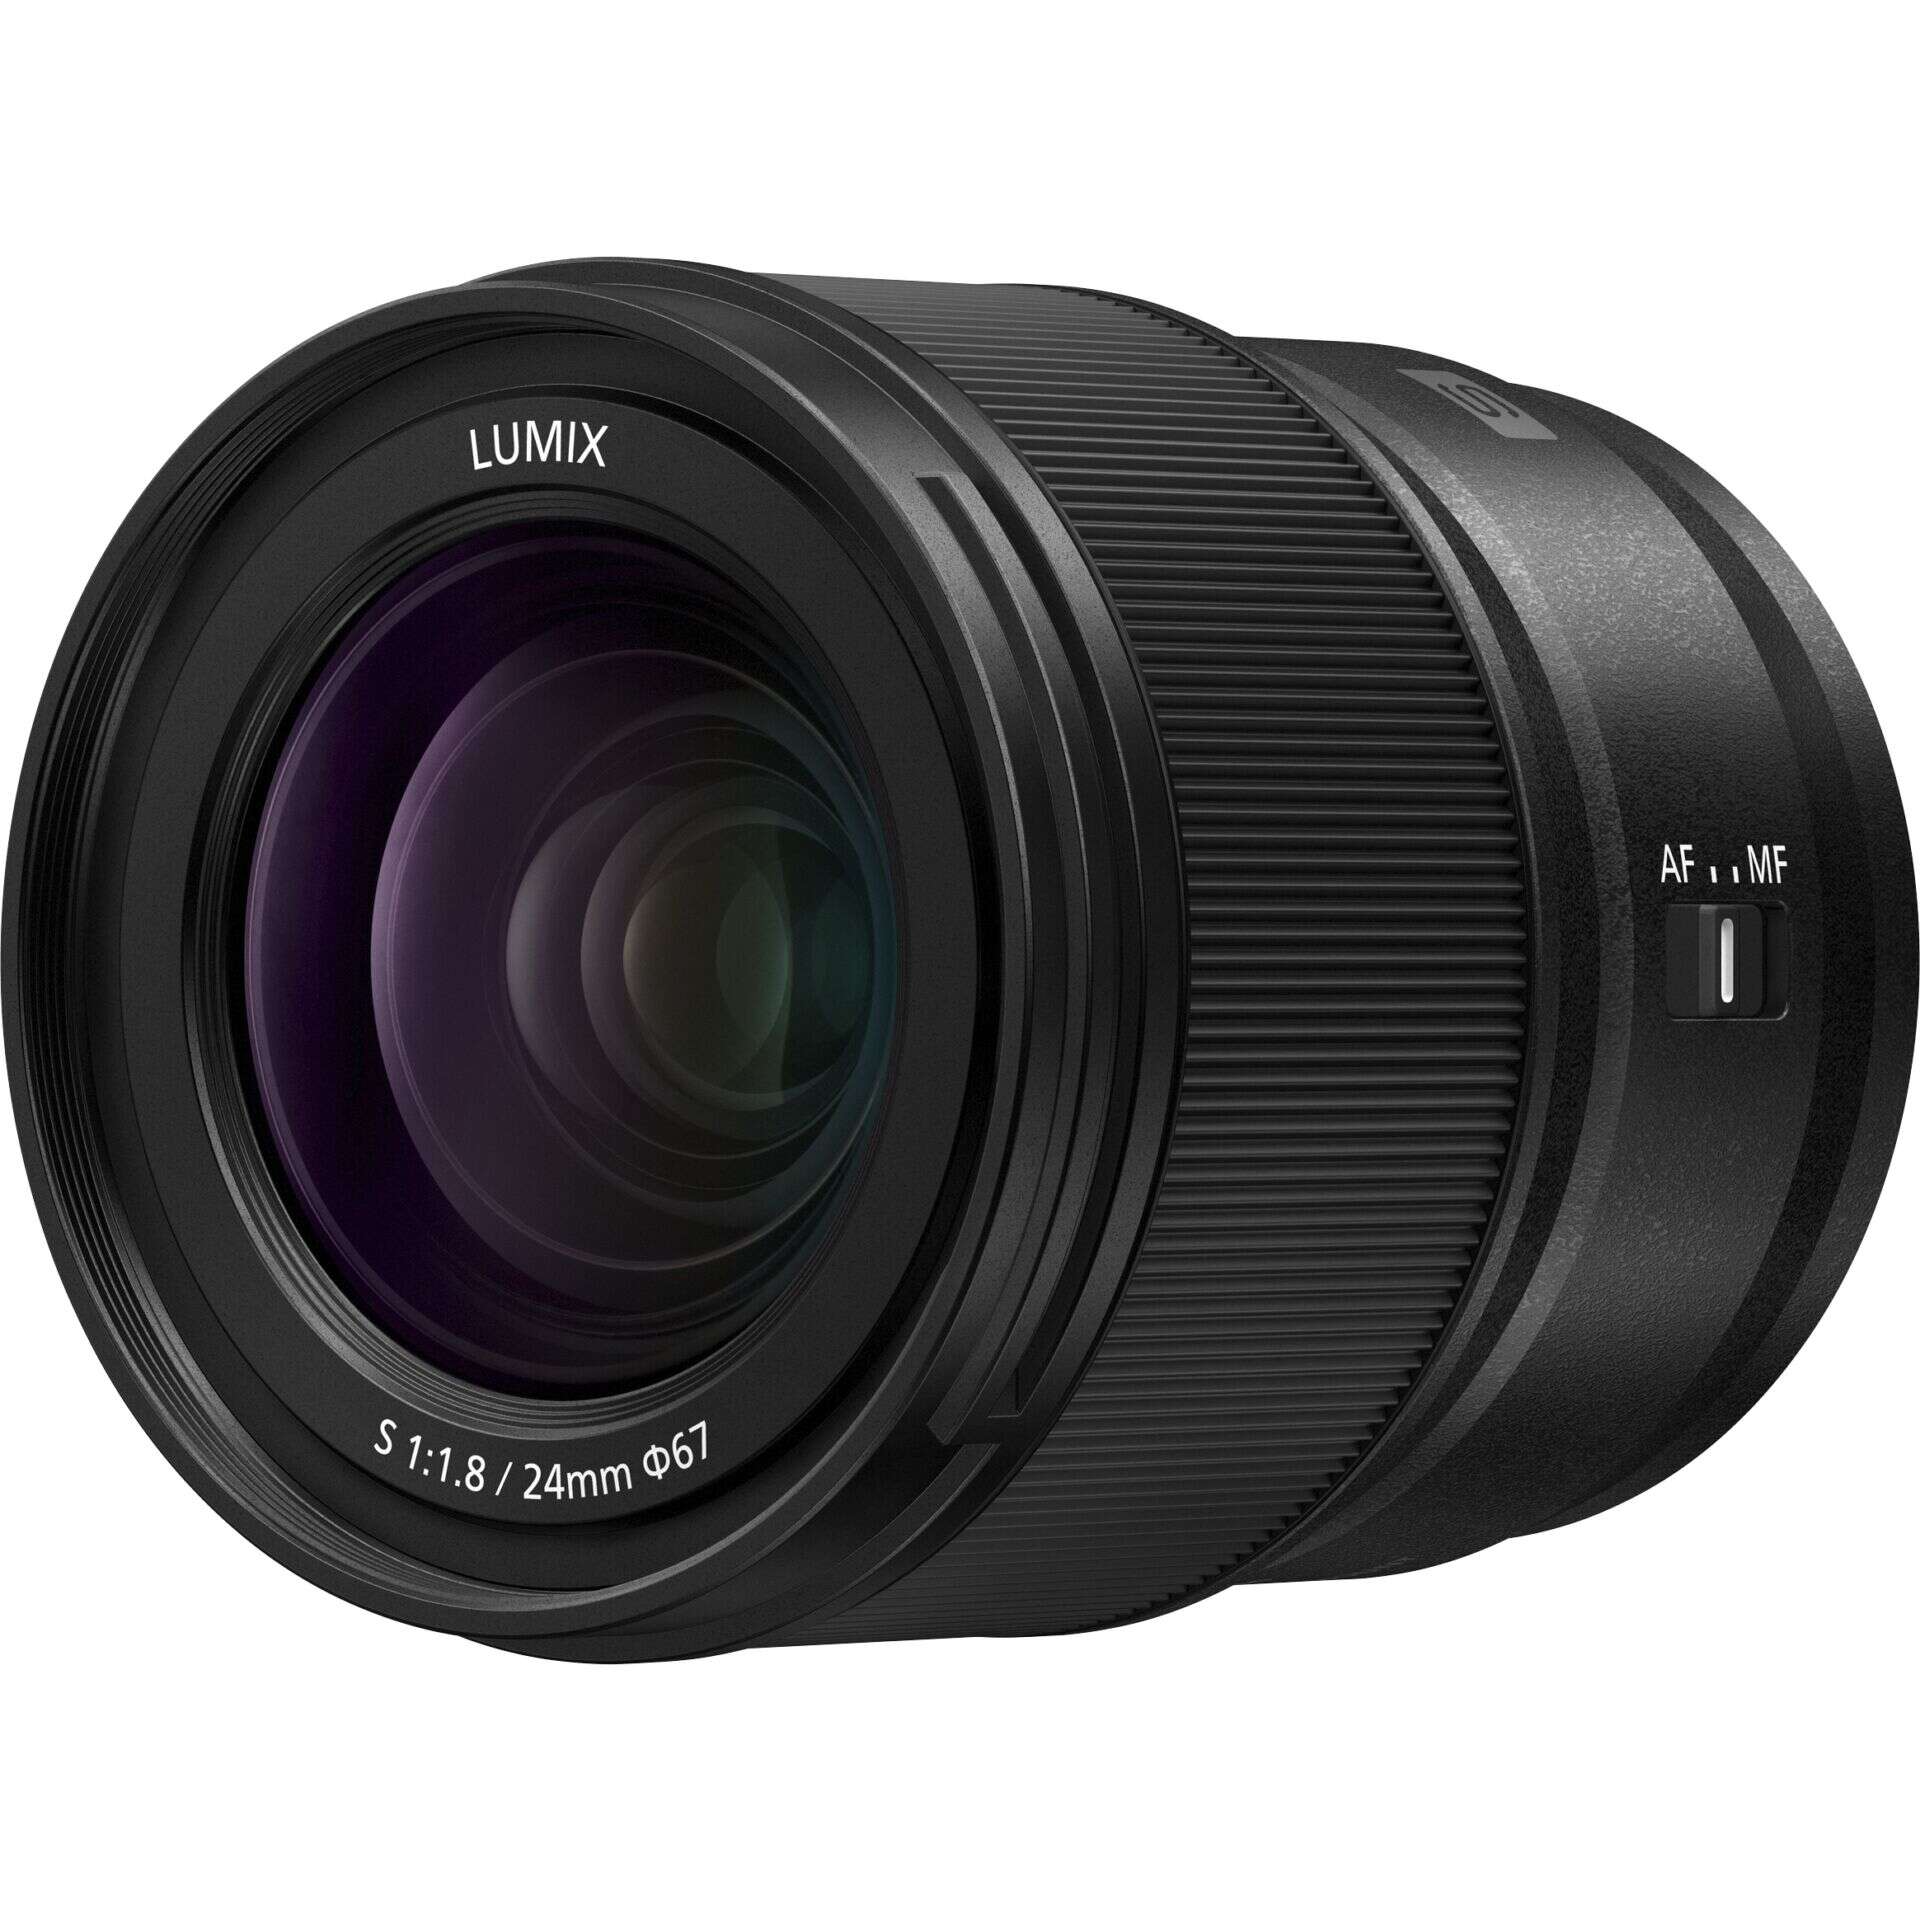 Panasonic lumix s 24mm f/1.8 objektív (l-mount)